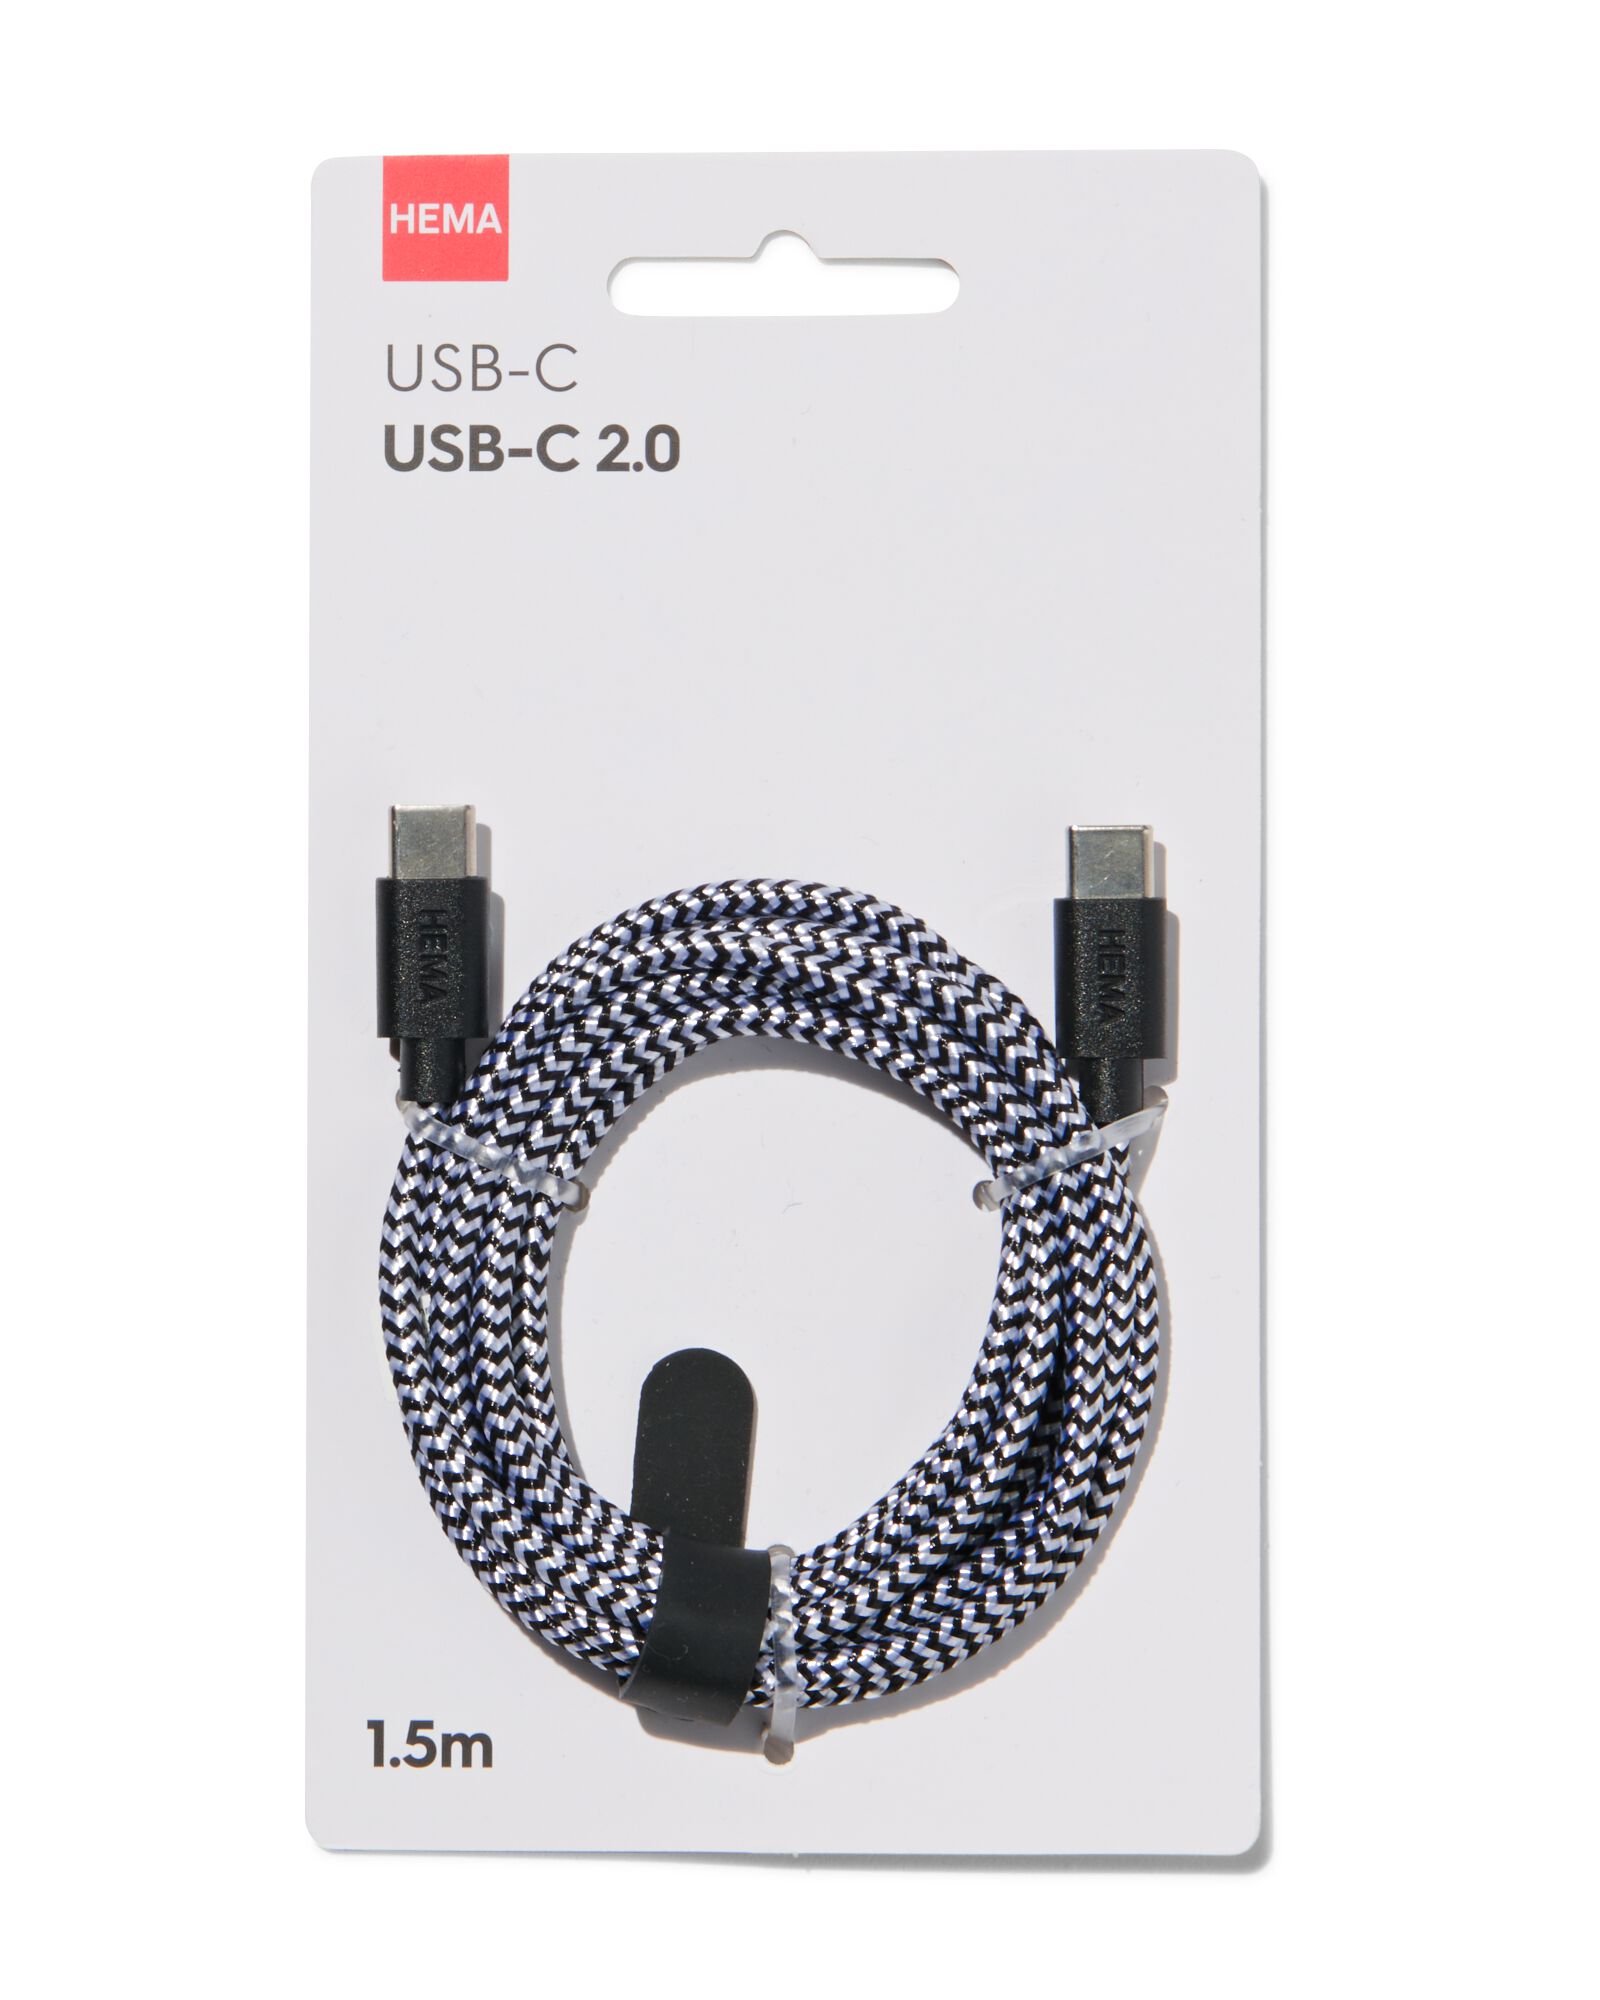 laadkabel USB-C/USB-C 2.0 1.5m - 39630176 - HEMA